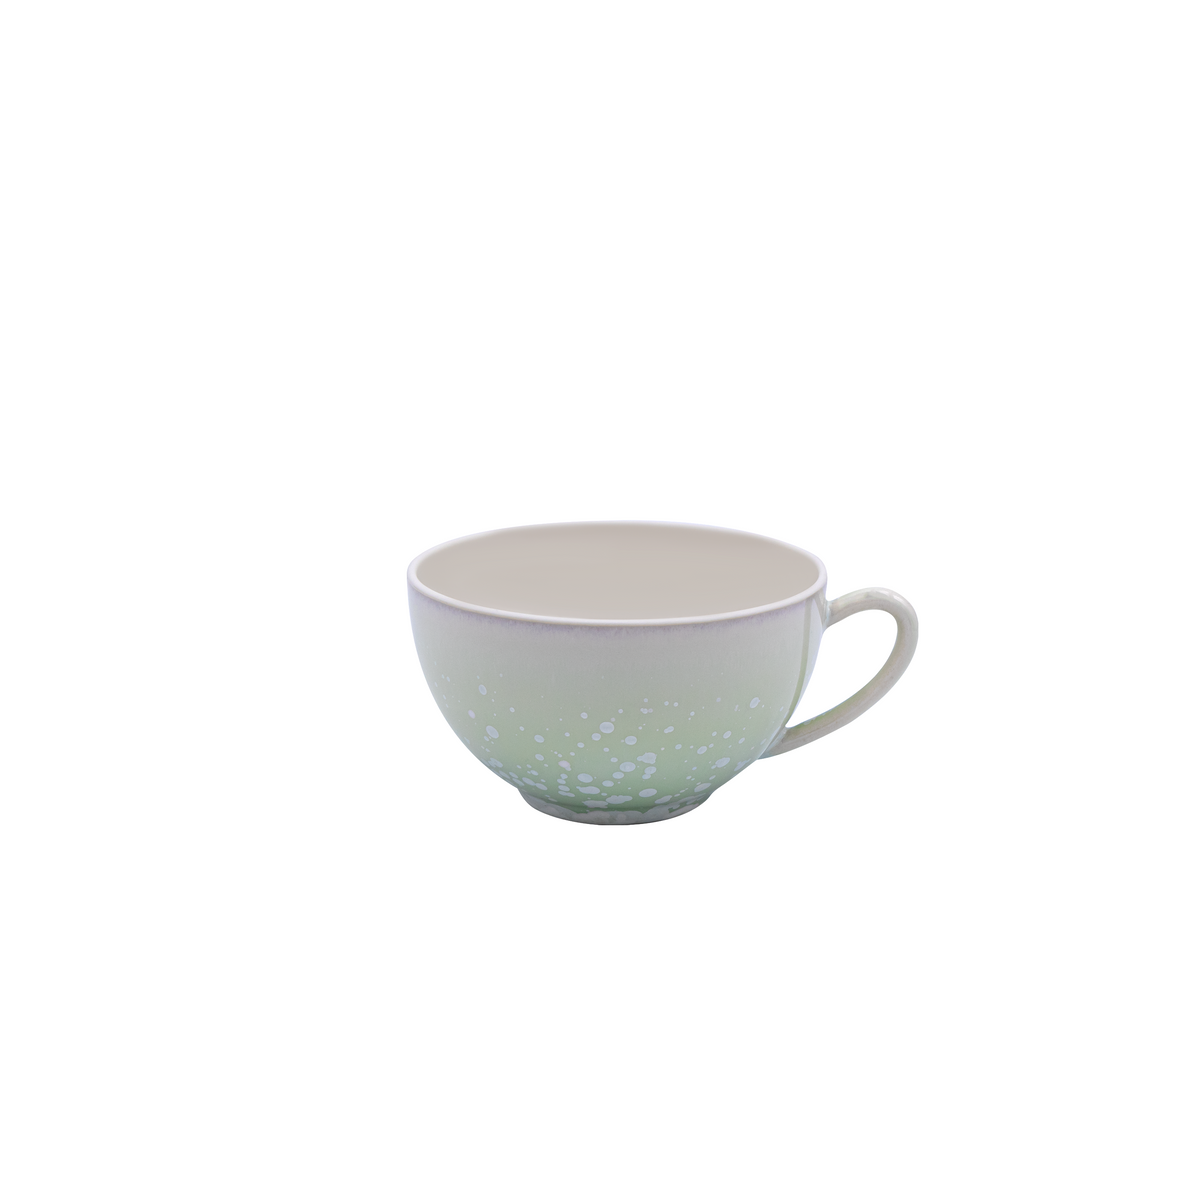 SONG Almond - Tea set (cup & saucer)